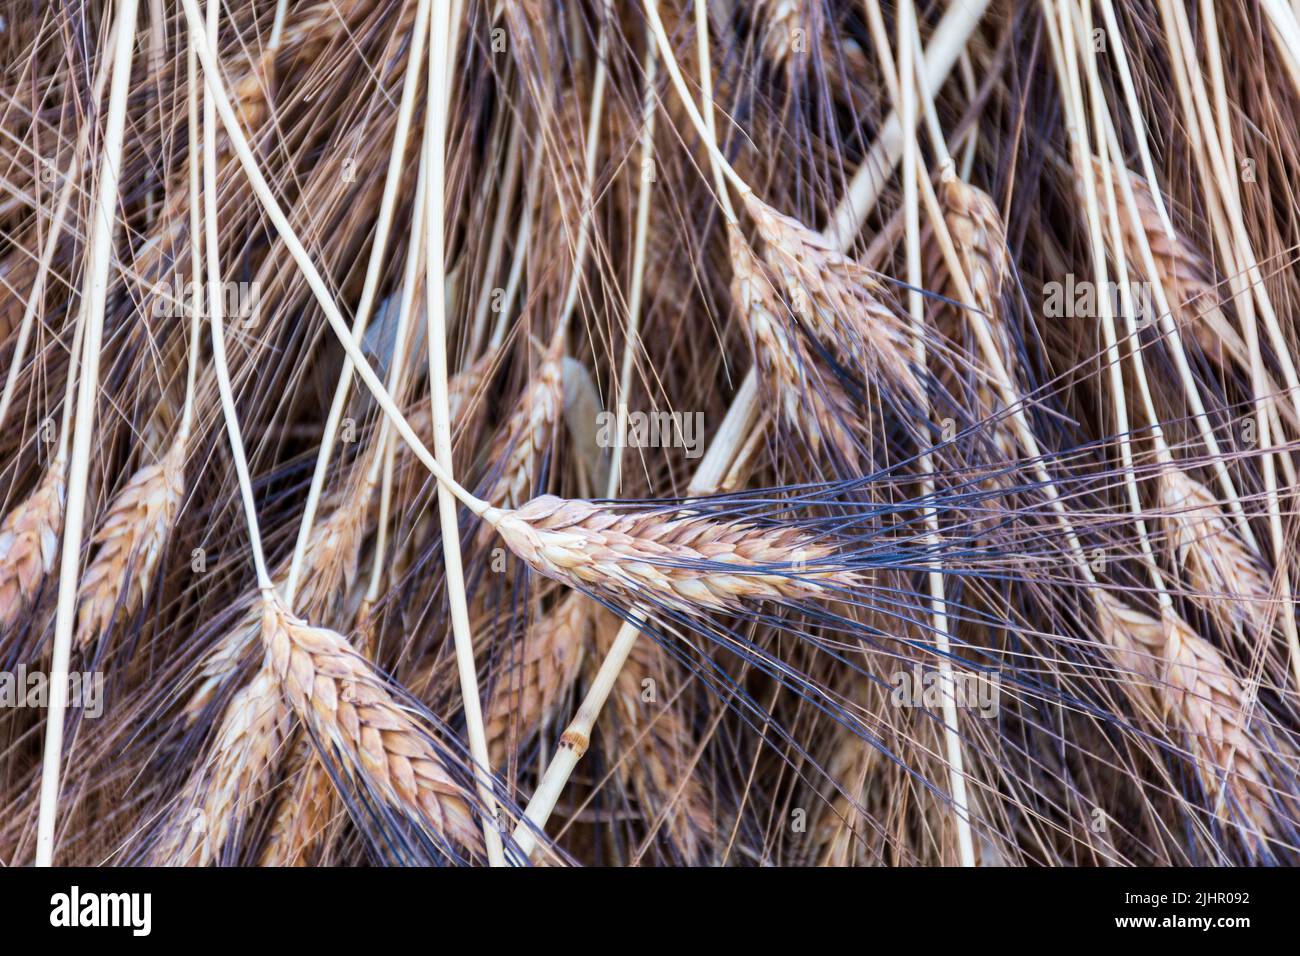 Primer plano de trigo maduro en el campo. Concepto de escasez mundial de trigo. Foto de stock